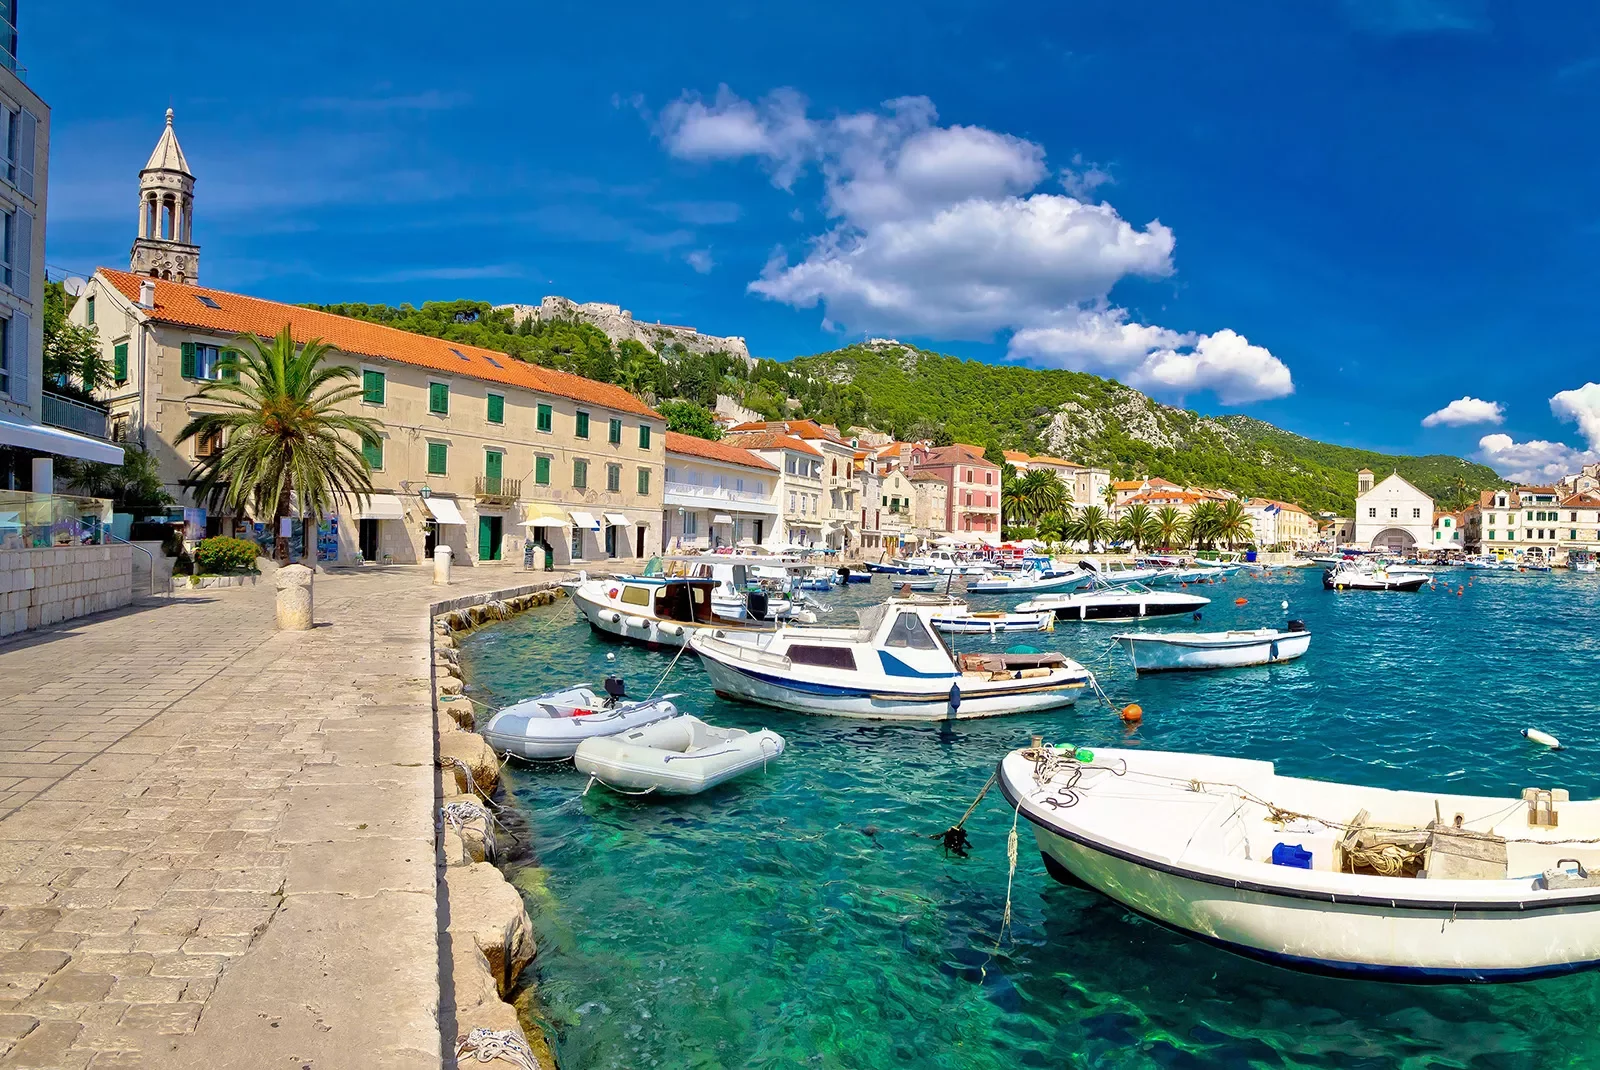 Wide shot of Croatian coastal town, boats, blue water, hills, etc.